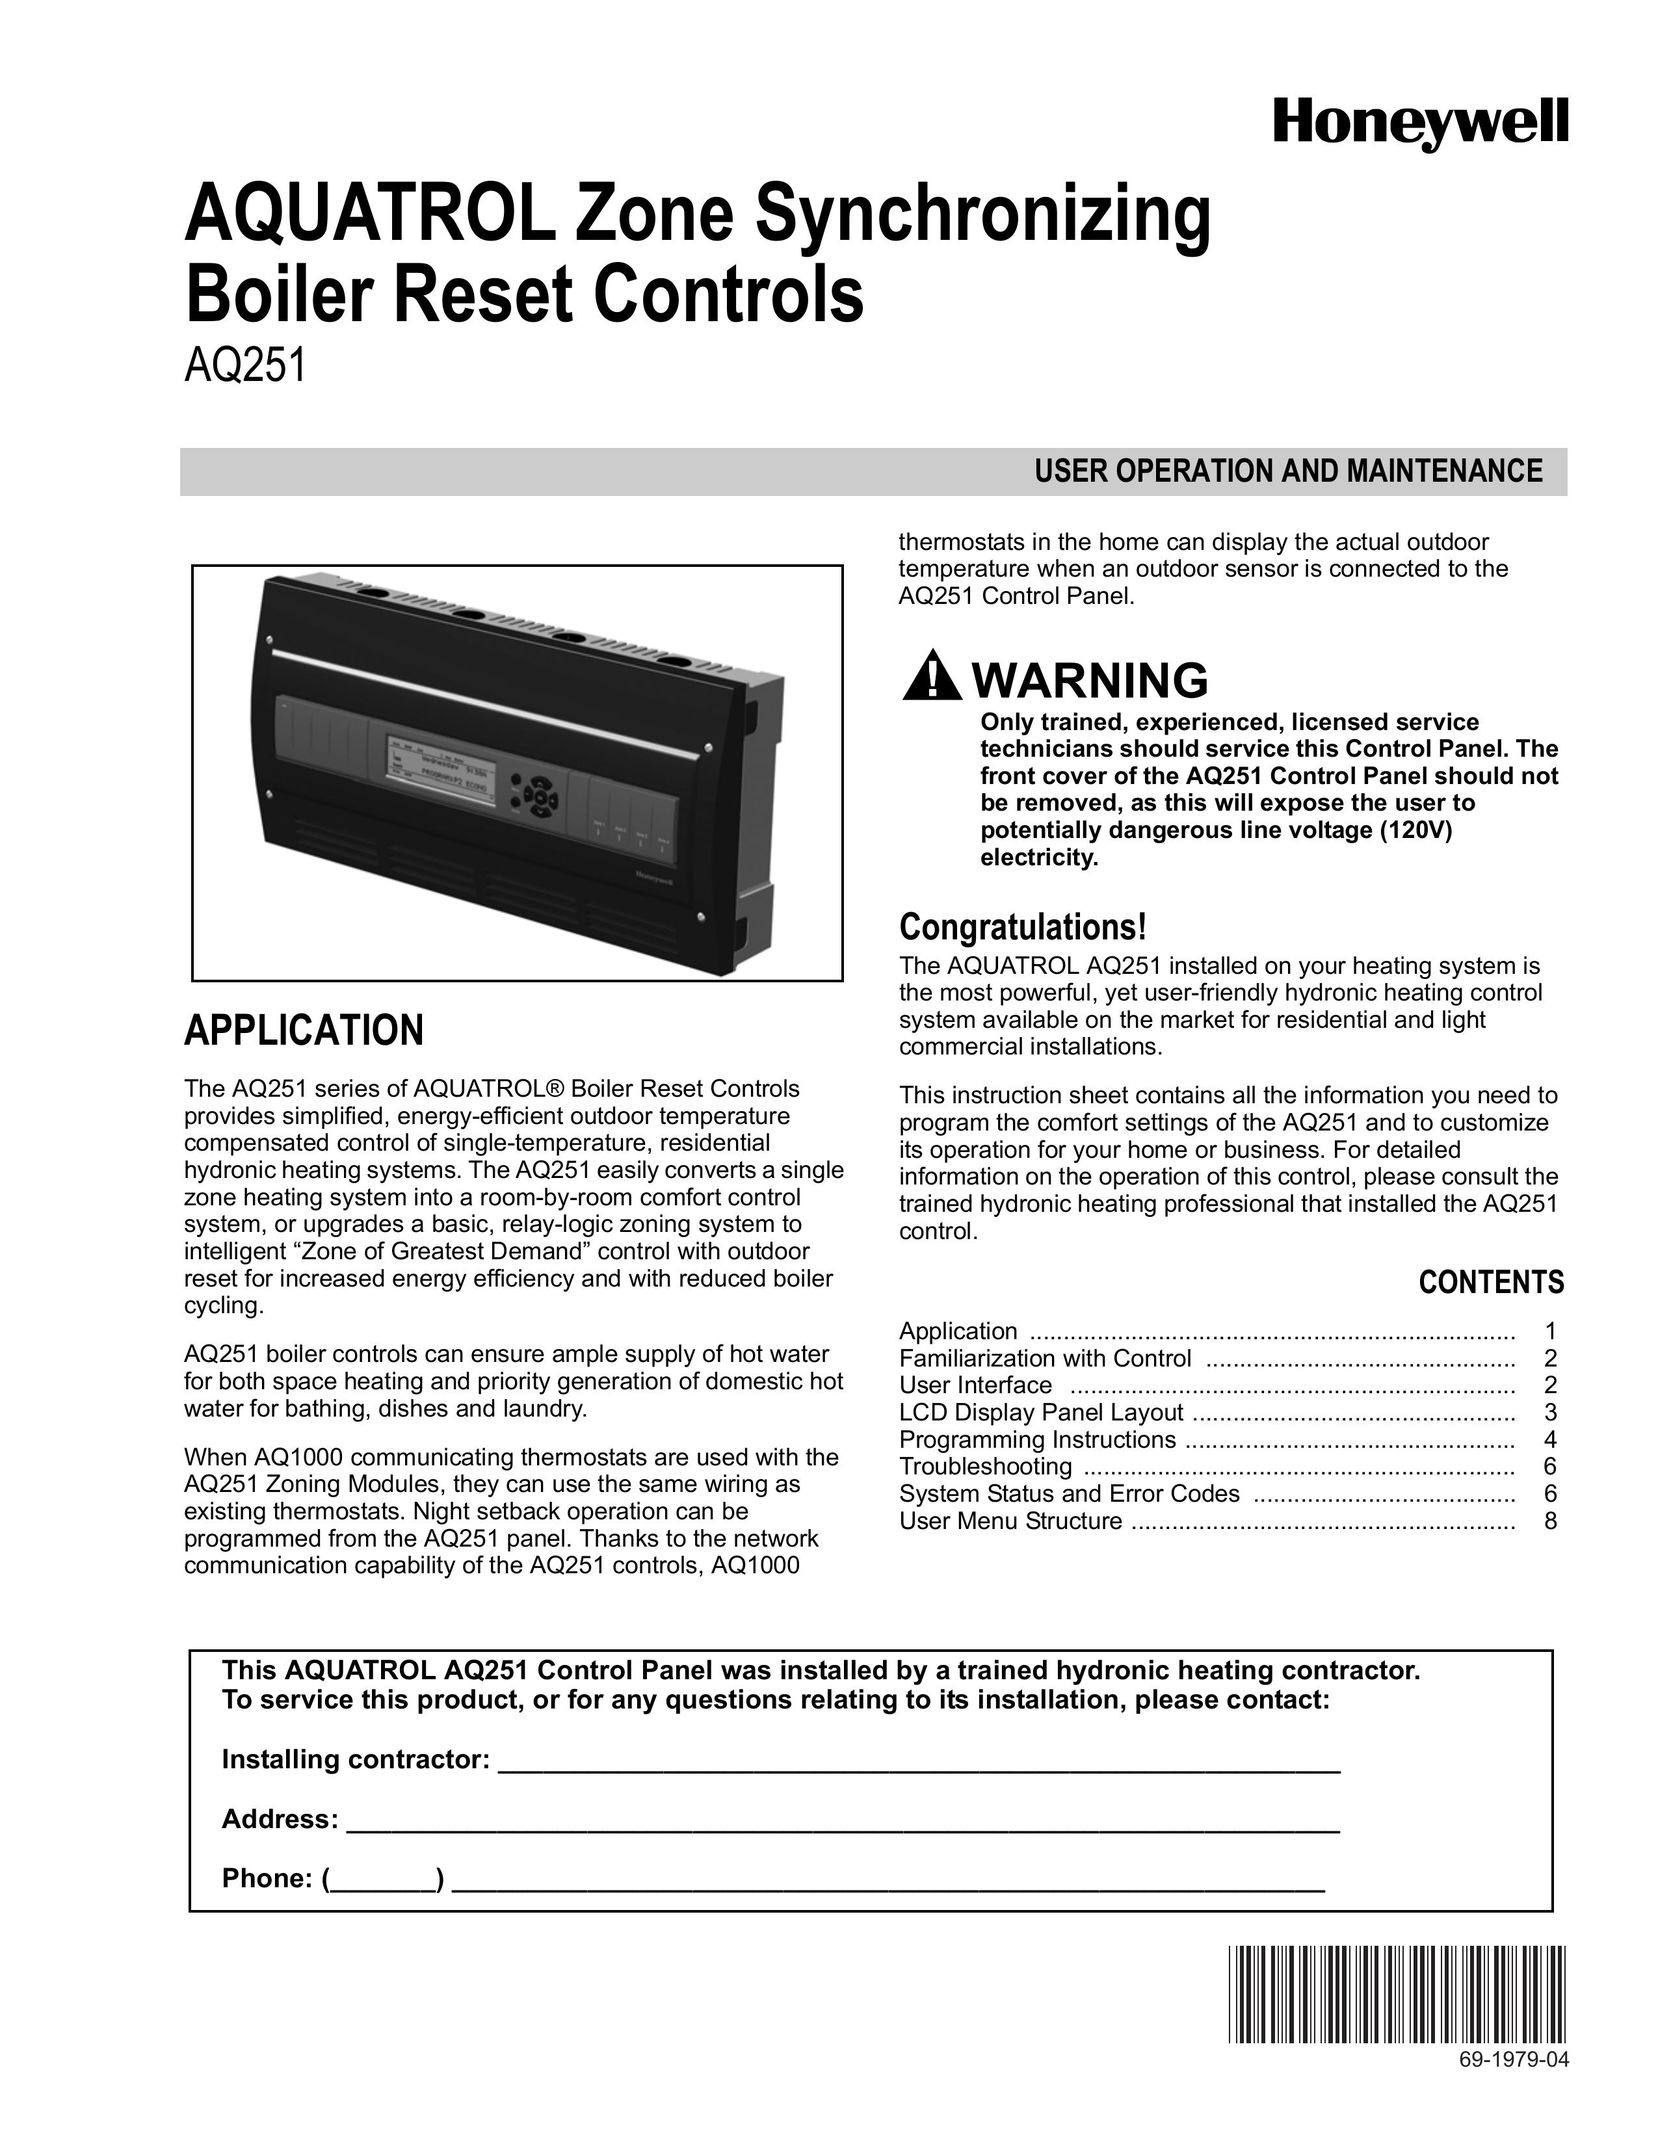 Honeywell AQ251 Boiler User Manual